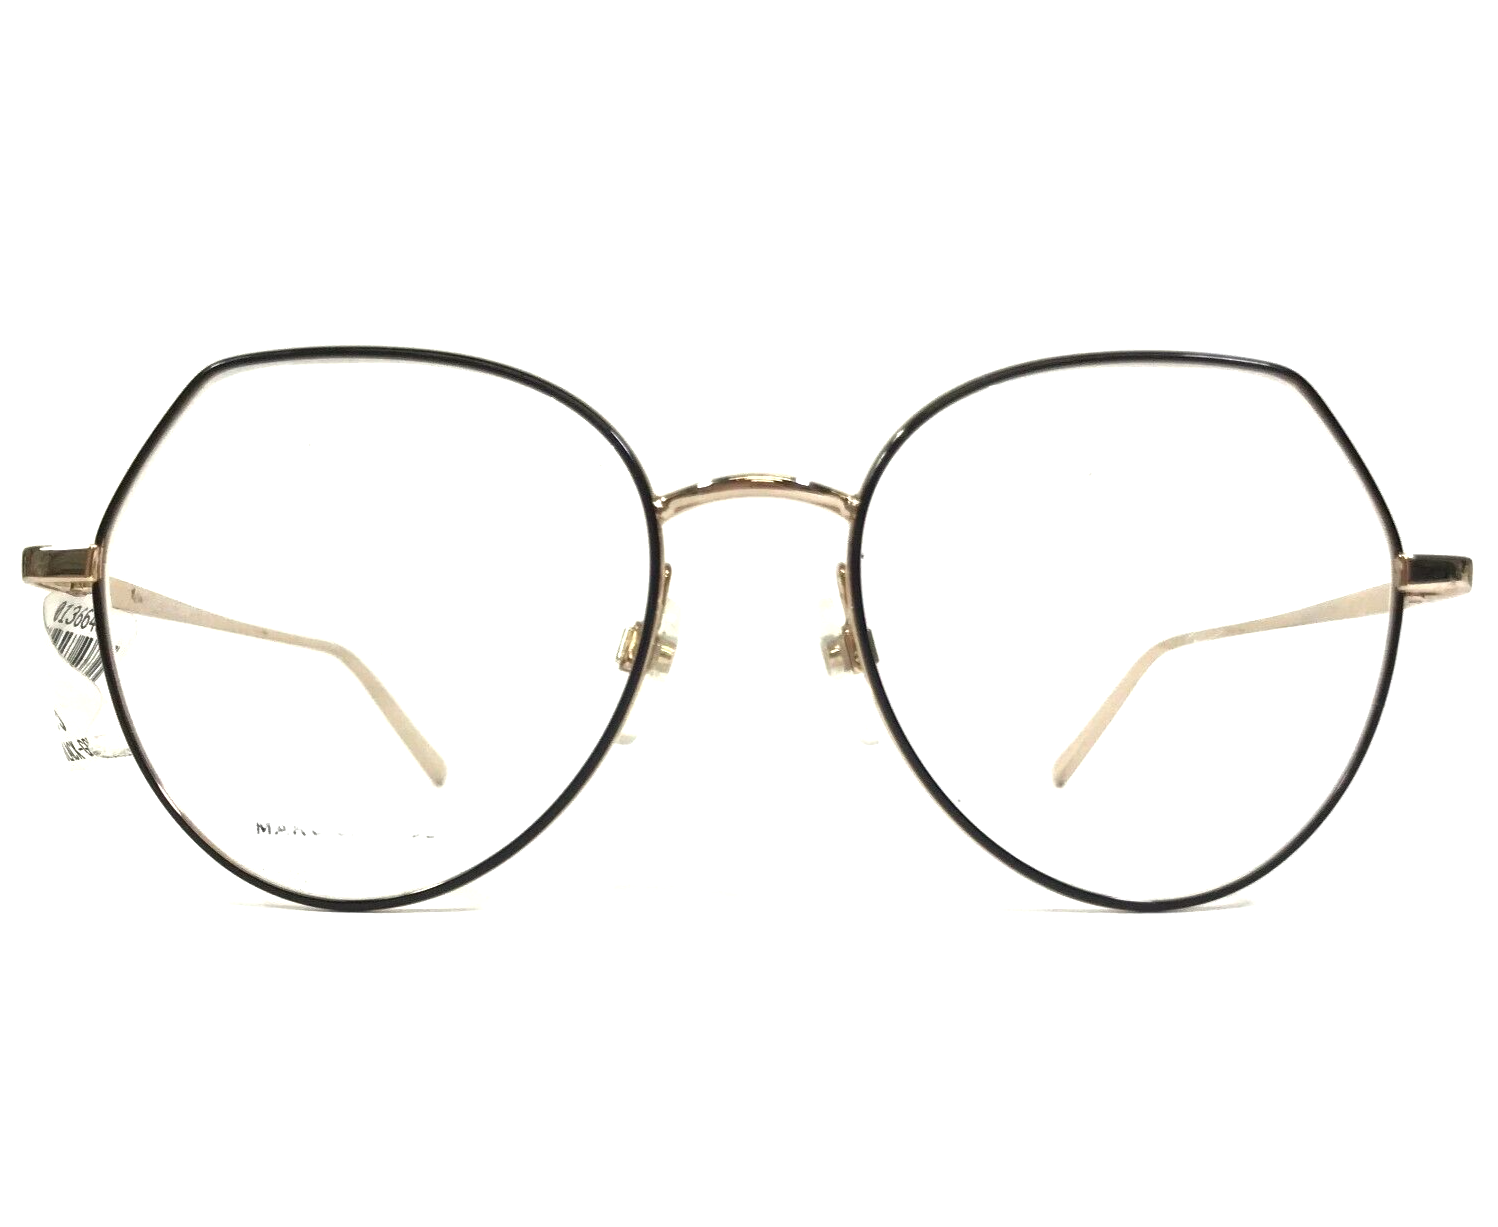 Primary image for Marc Jacobs Eyeglasses Frames 475 2M2 Black Gold Cat Eye Wire Rim 52-18-140